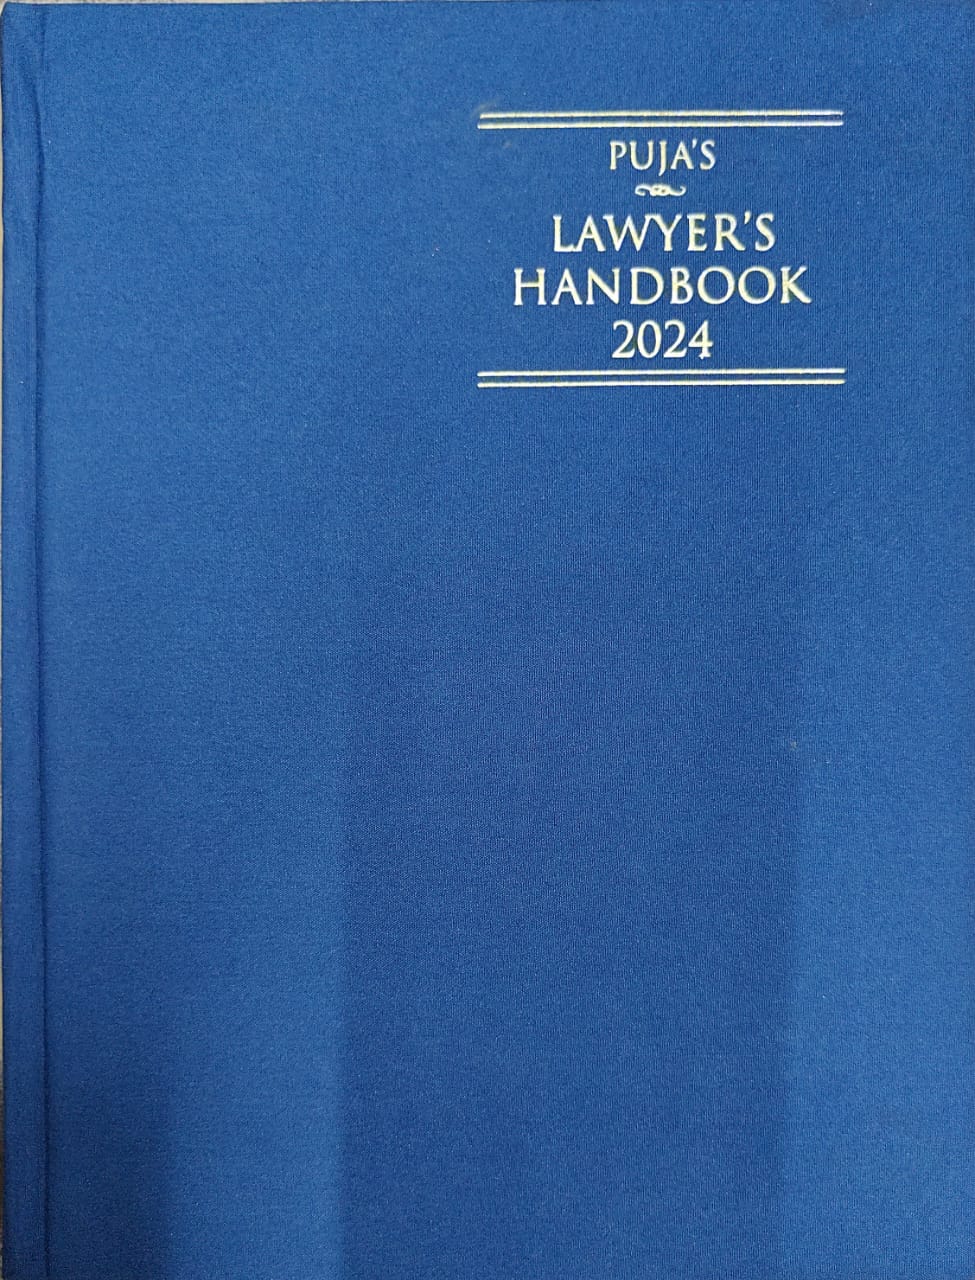 Pujaâ€™s Lawyerâ€™s Handbook 2024 - Blue Big Size Hardbound